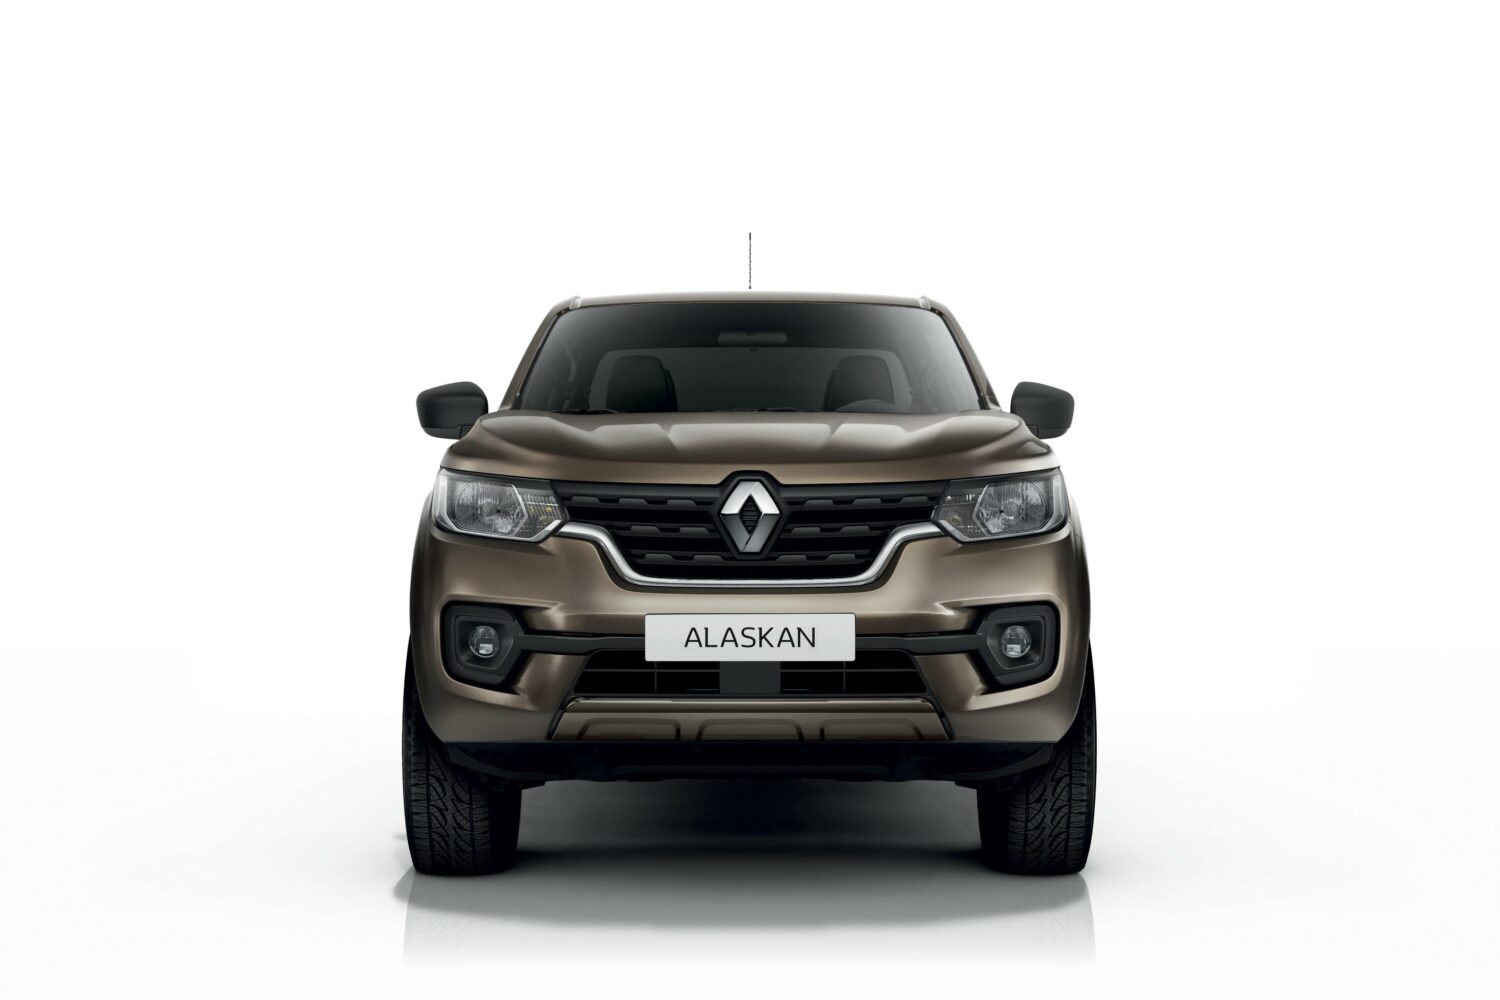 2019 - Nouveau Renault ALASKAN.jpg